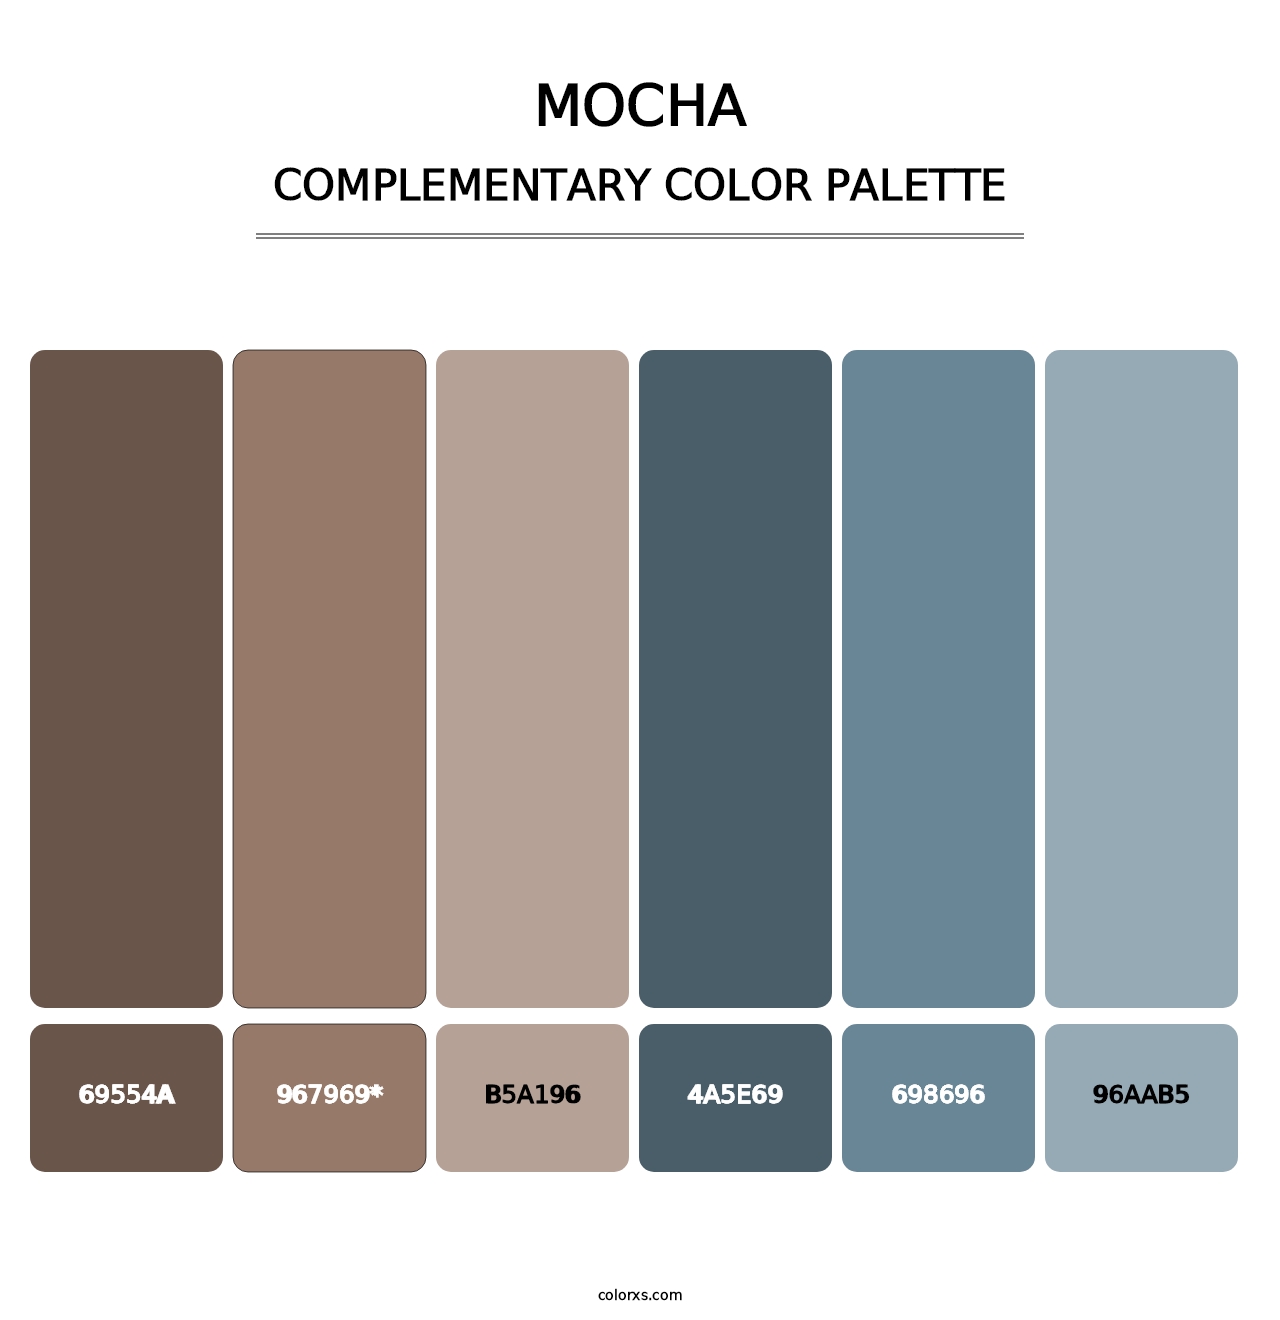 Mocha - Complementary Color Palette